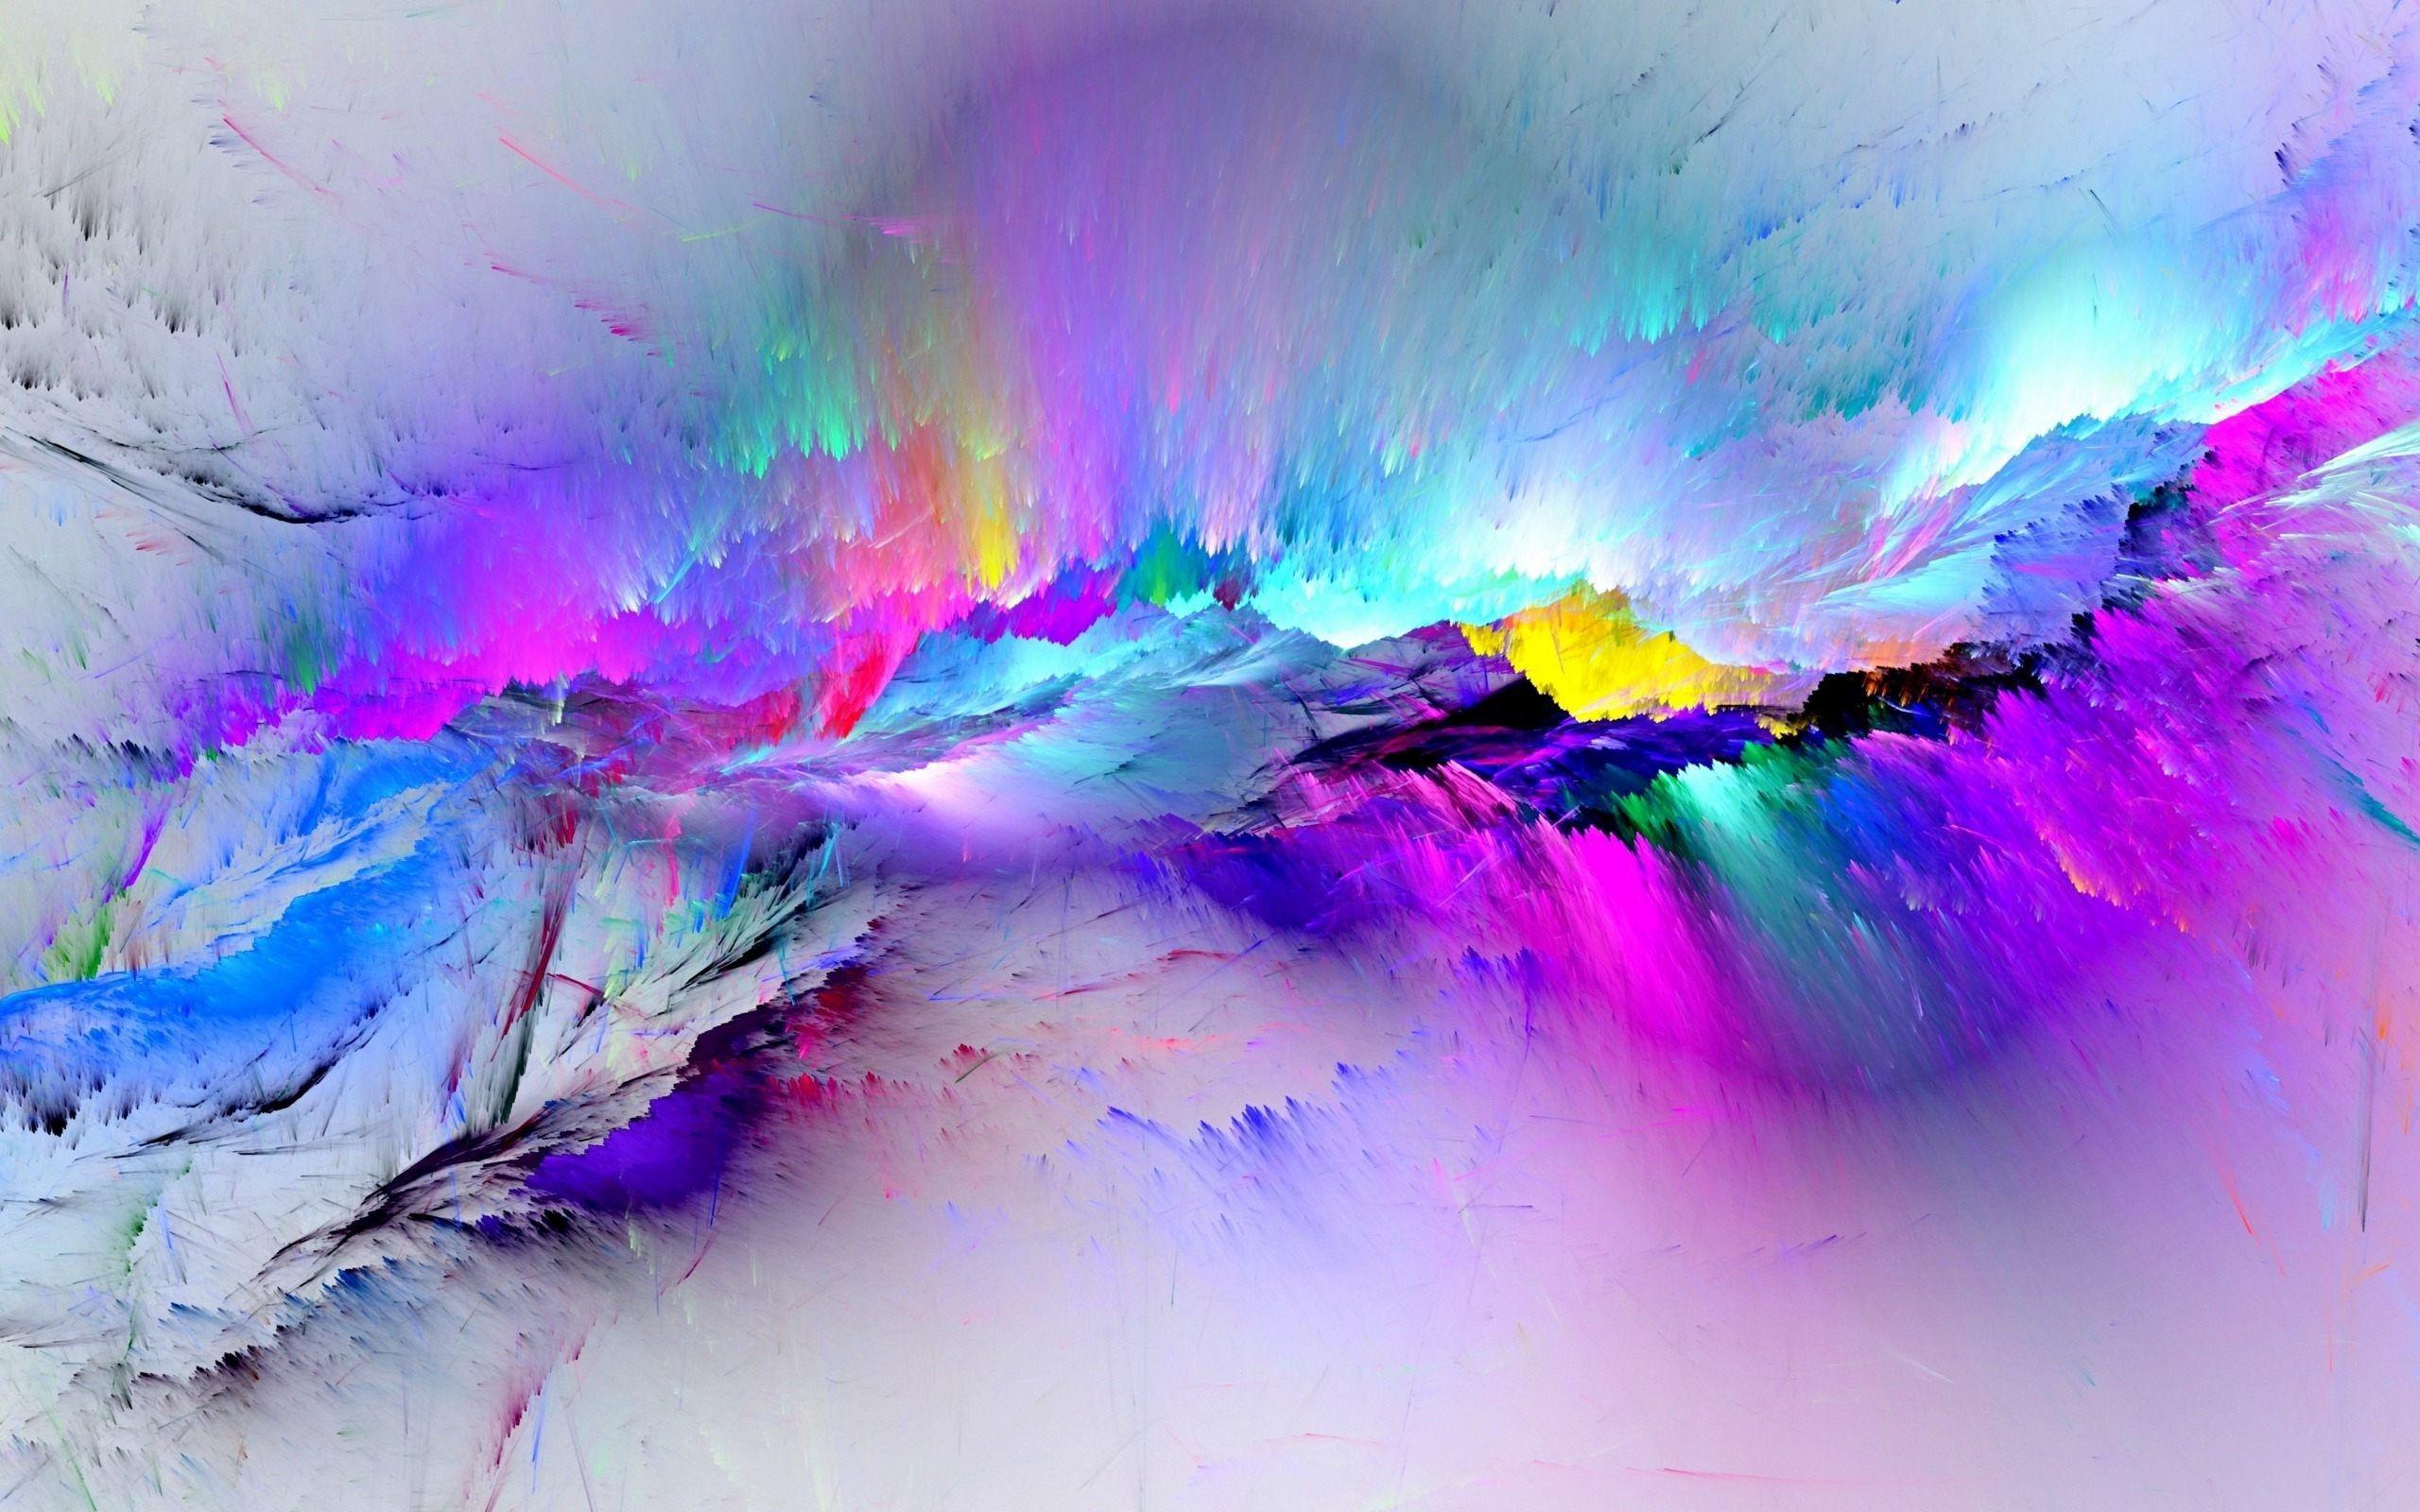 Creative & Graphics Splash of Colors wallpaper Desktop, Phone